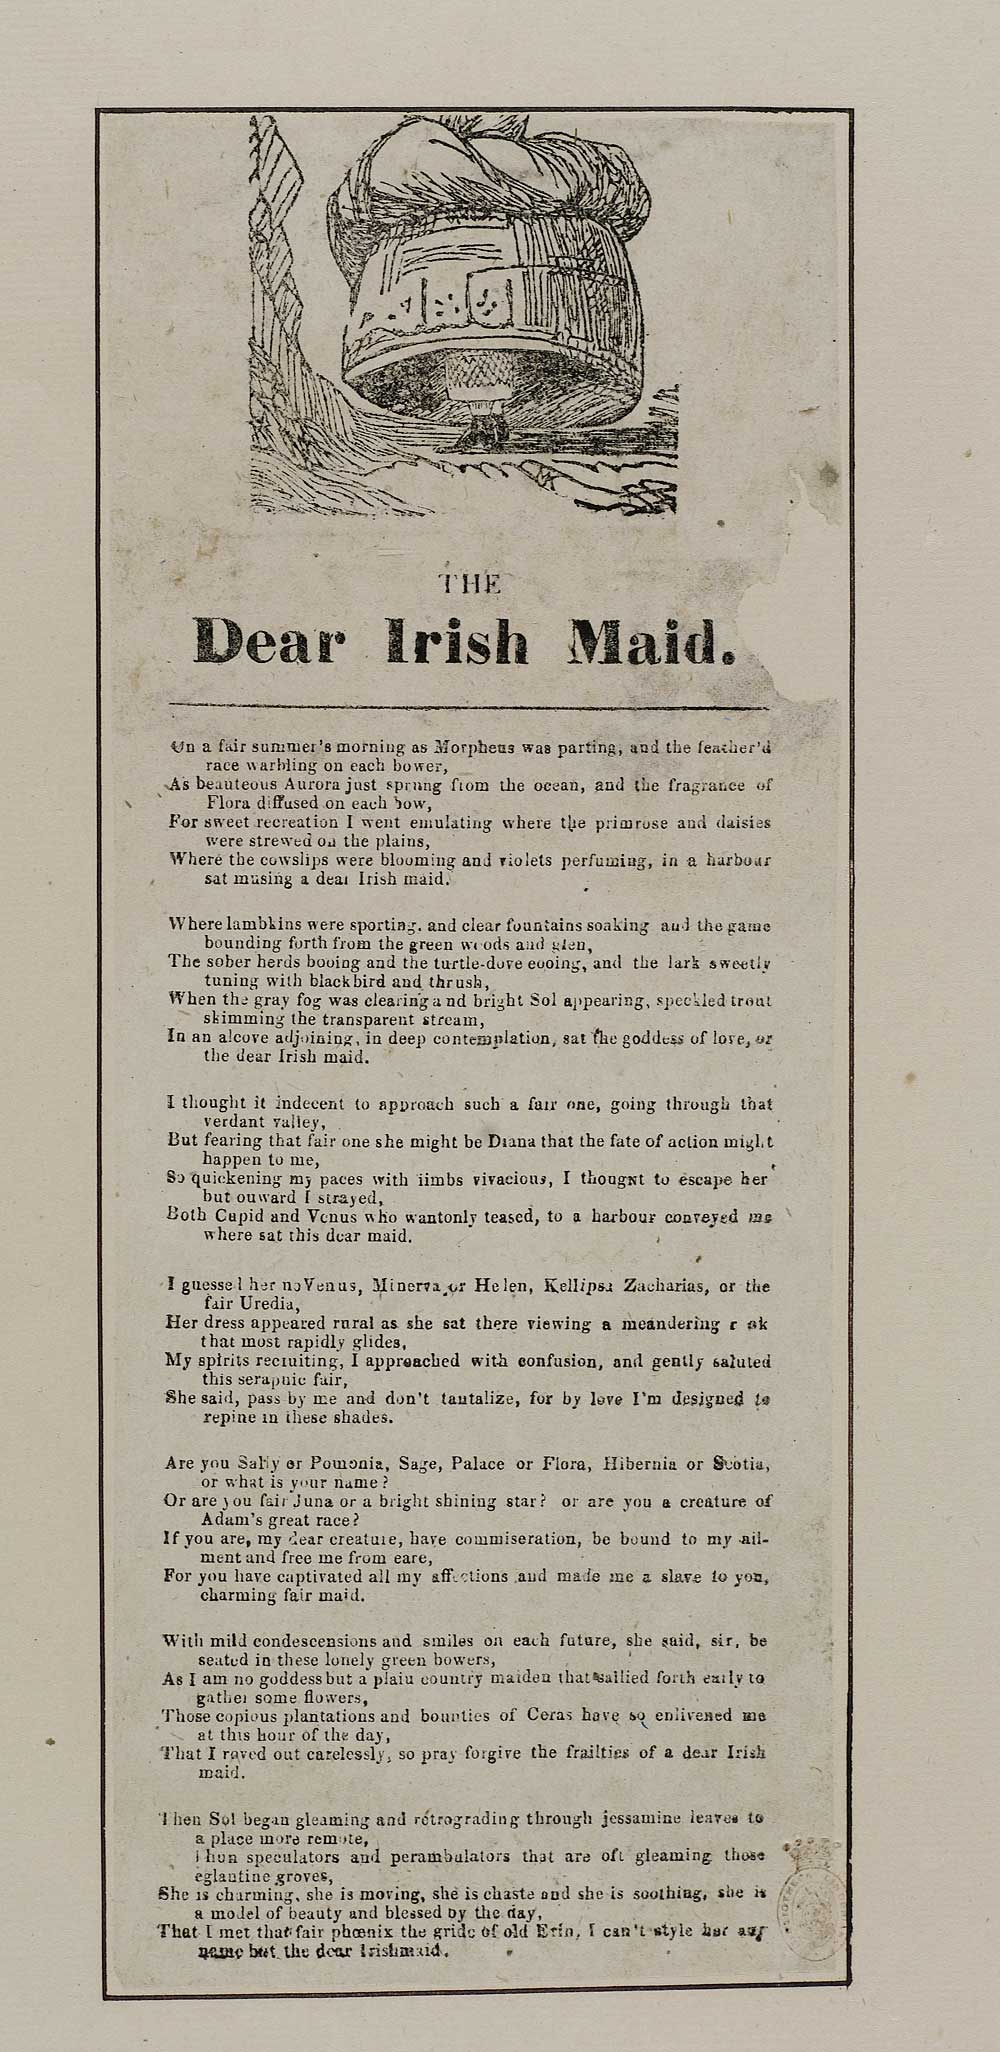 Dear Irish maid - Courtship & marriage - English ballads